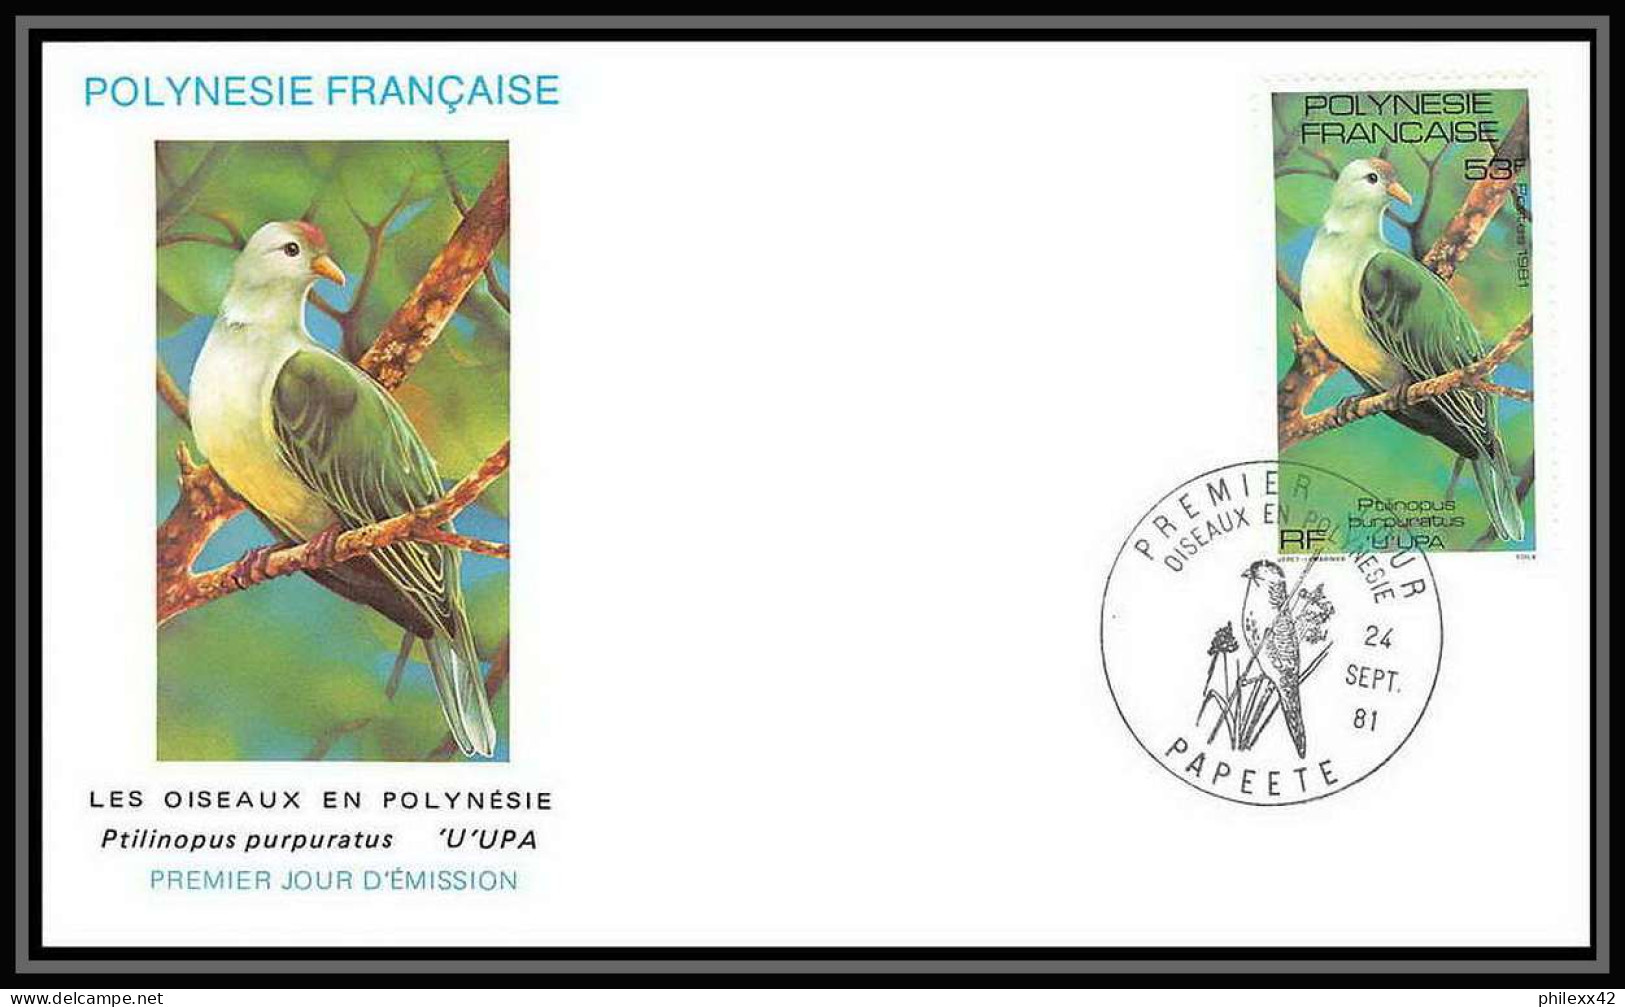 1694 épreuve de luxe / deluxe proof Polynésie (Polynesia) N° 168 / 170 oiseaux (bird birds oiseau) + fdc